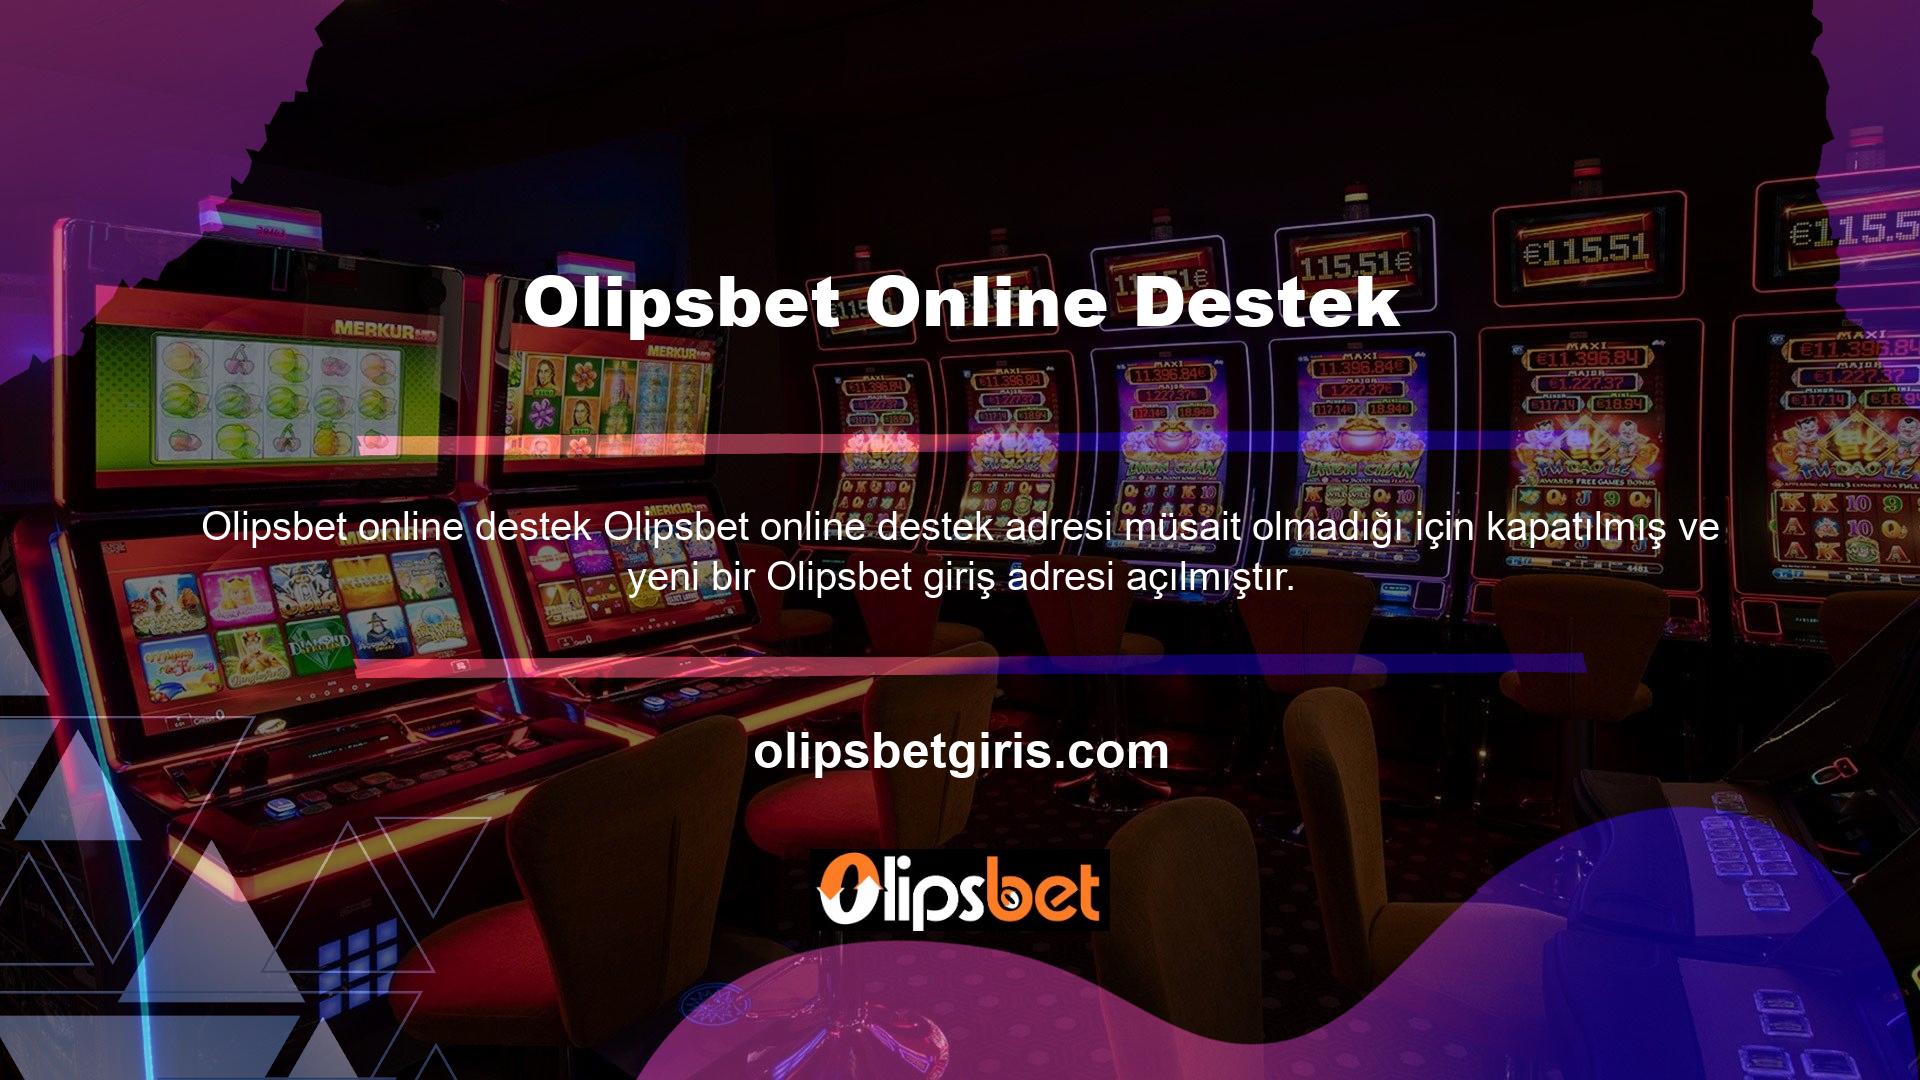 Olipsbet online destek